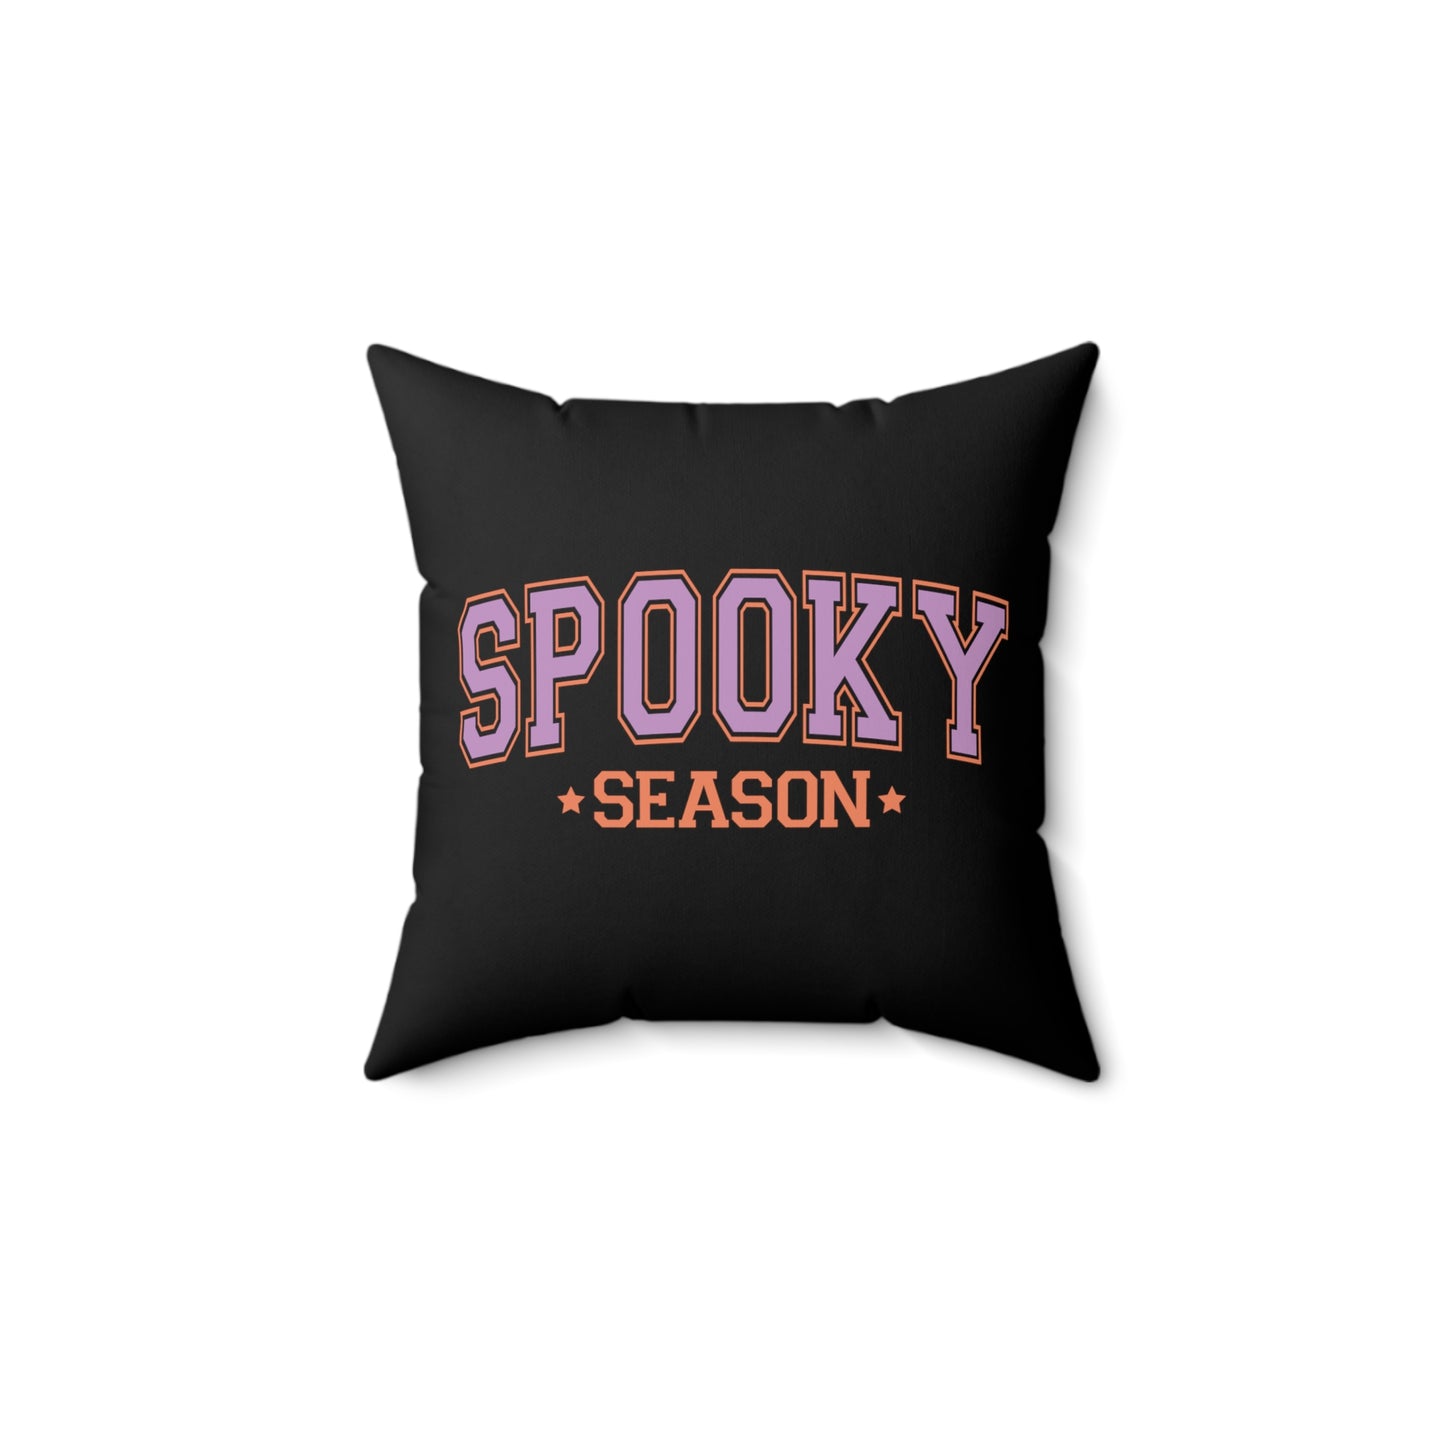 Spooky Season | Square Pillow